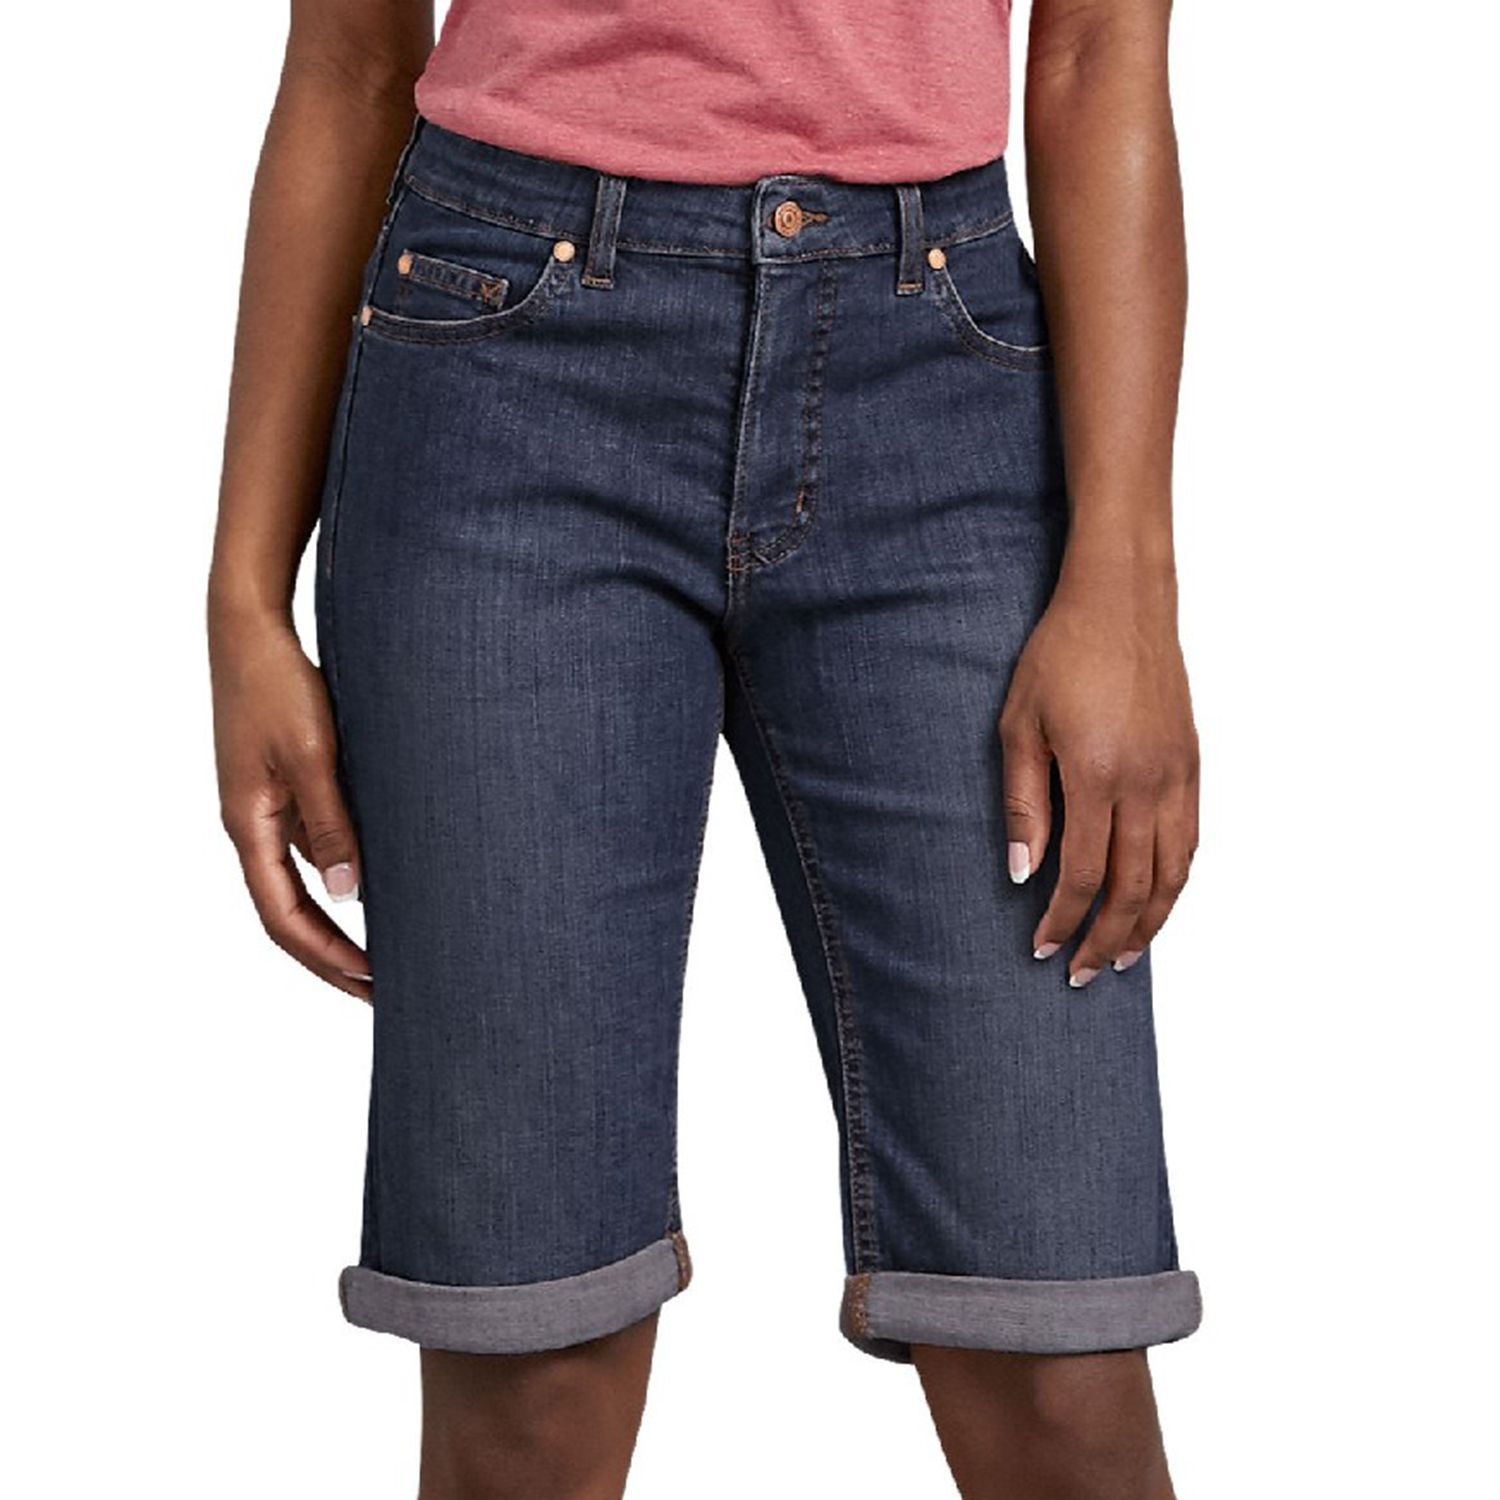 bermuda jean shorts womens